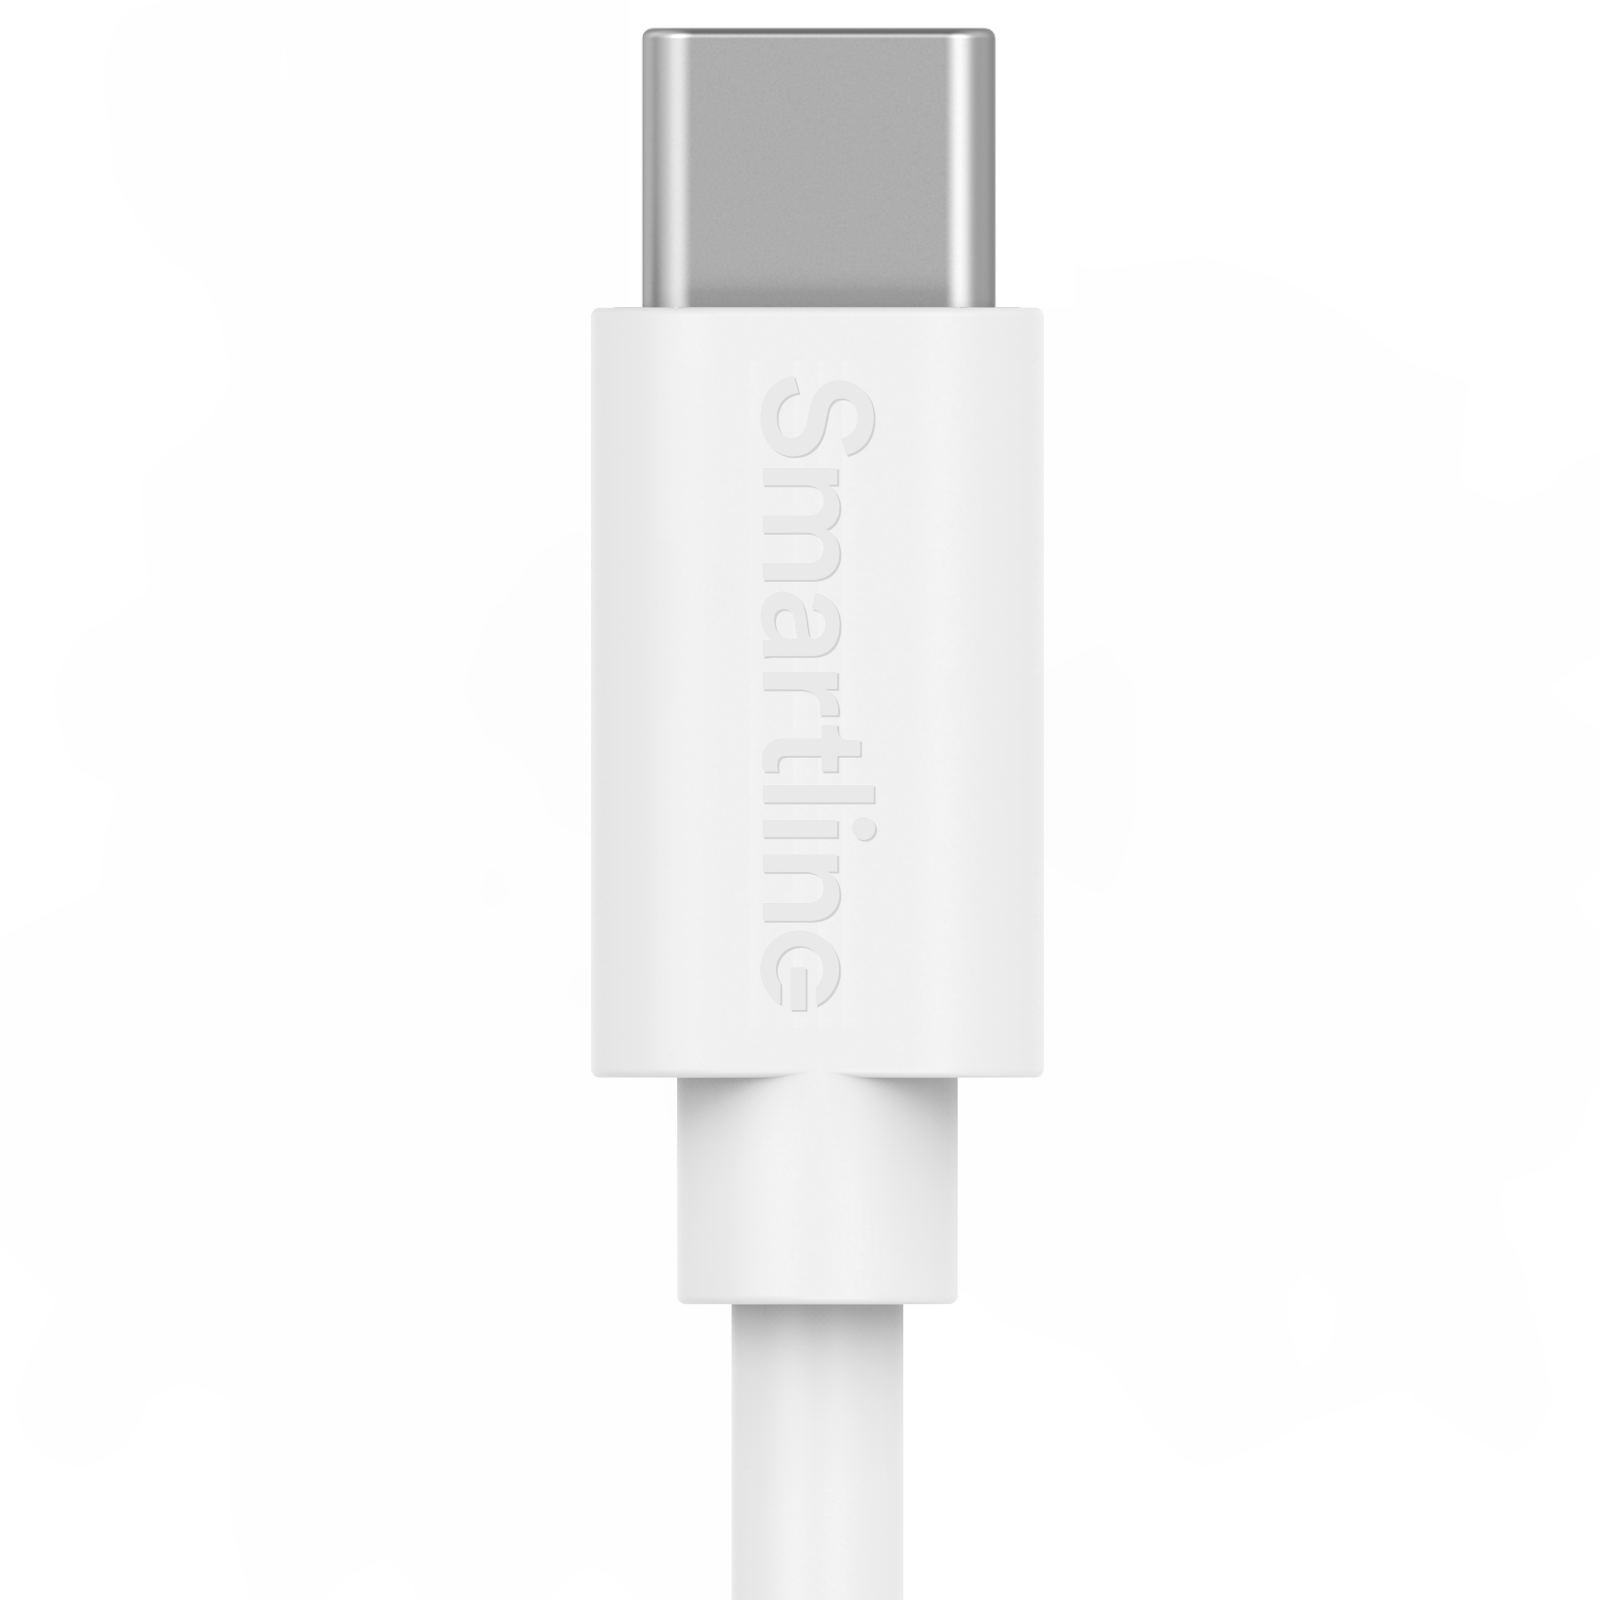 Cable USB-A a USB-C 2 metros Blanco